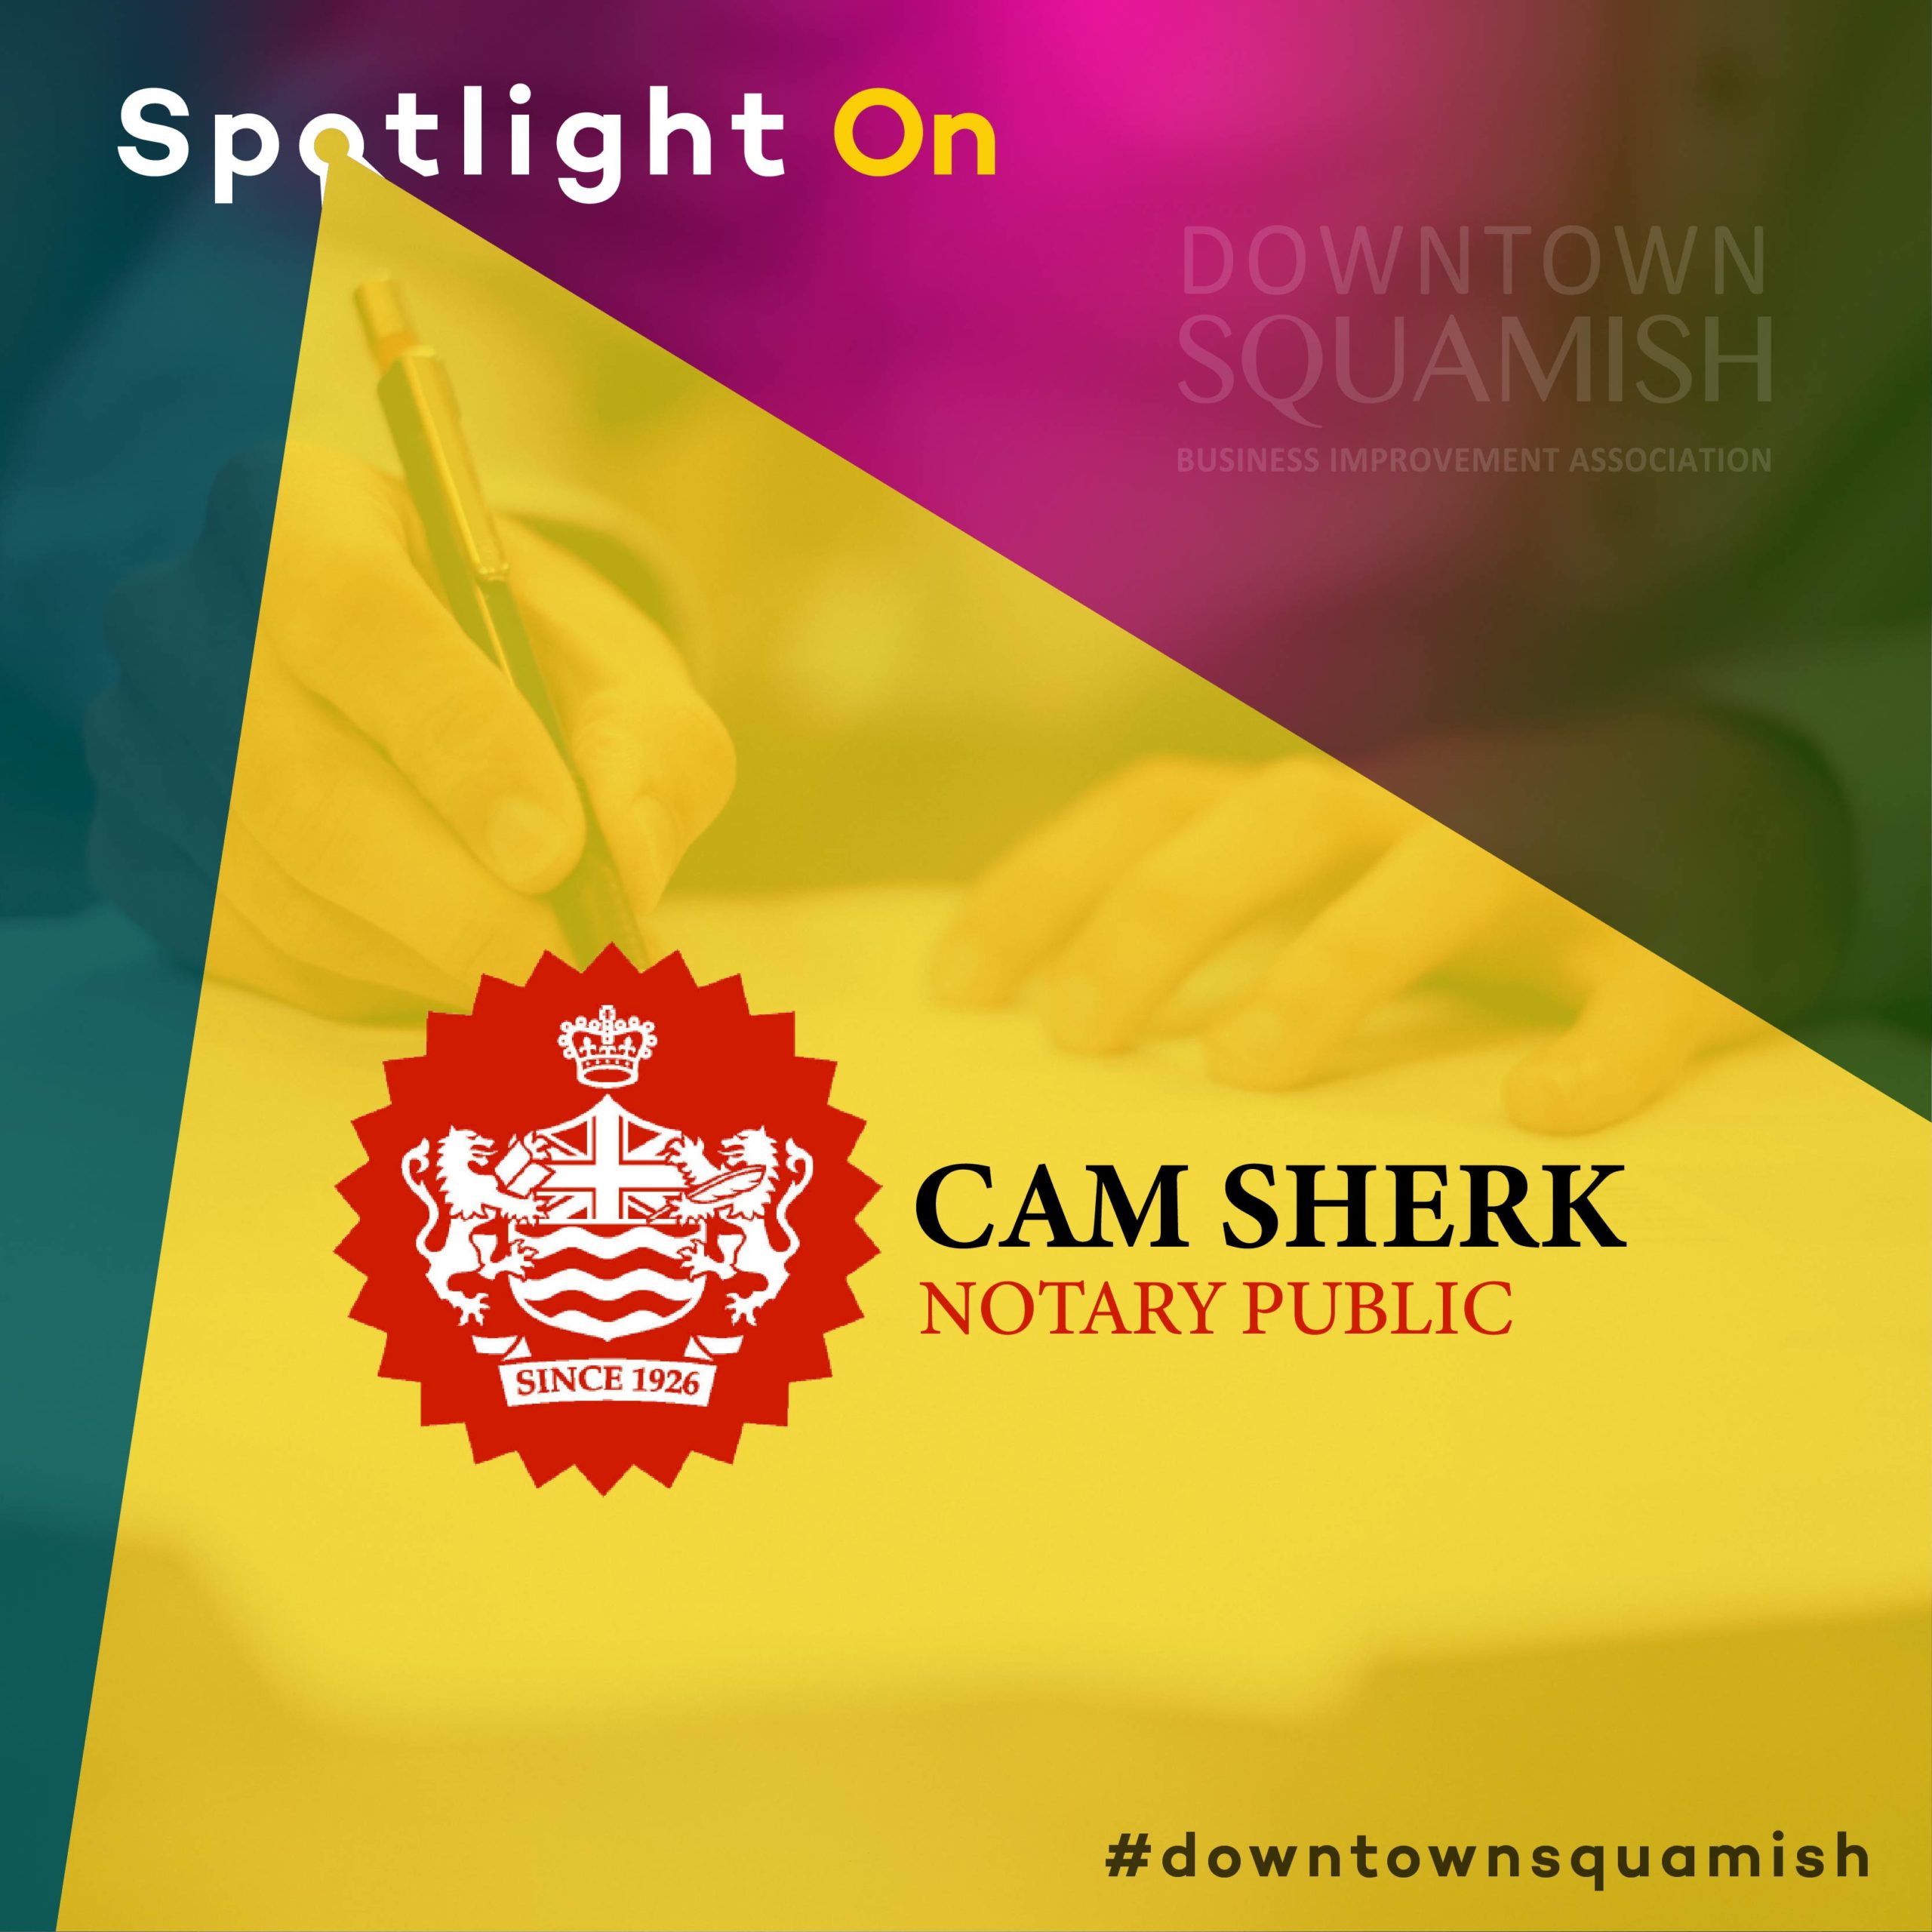 https://www.downtownsquamish.com/wp-content/uploads/2020/08/Spotlight_On_Cam-Sherk-scaled.jpg